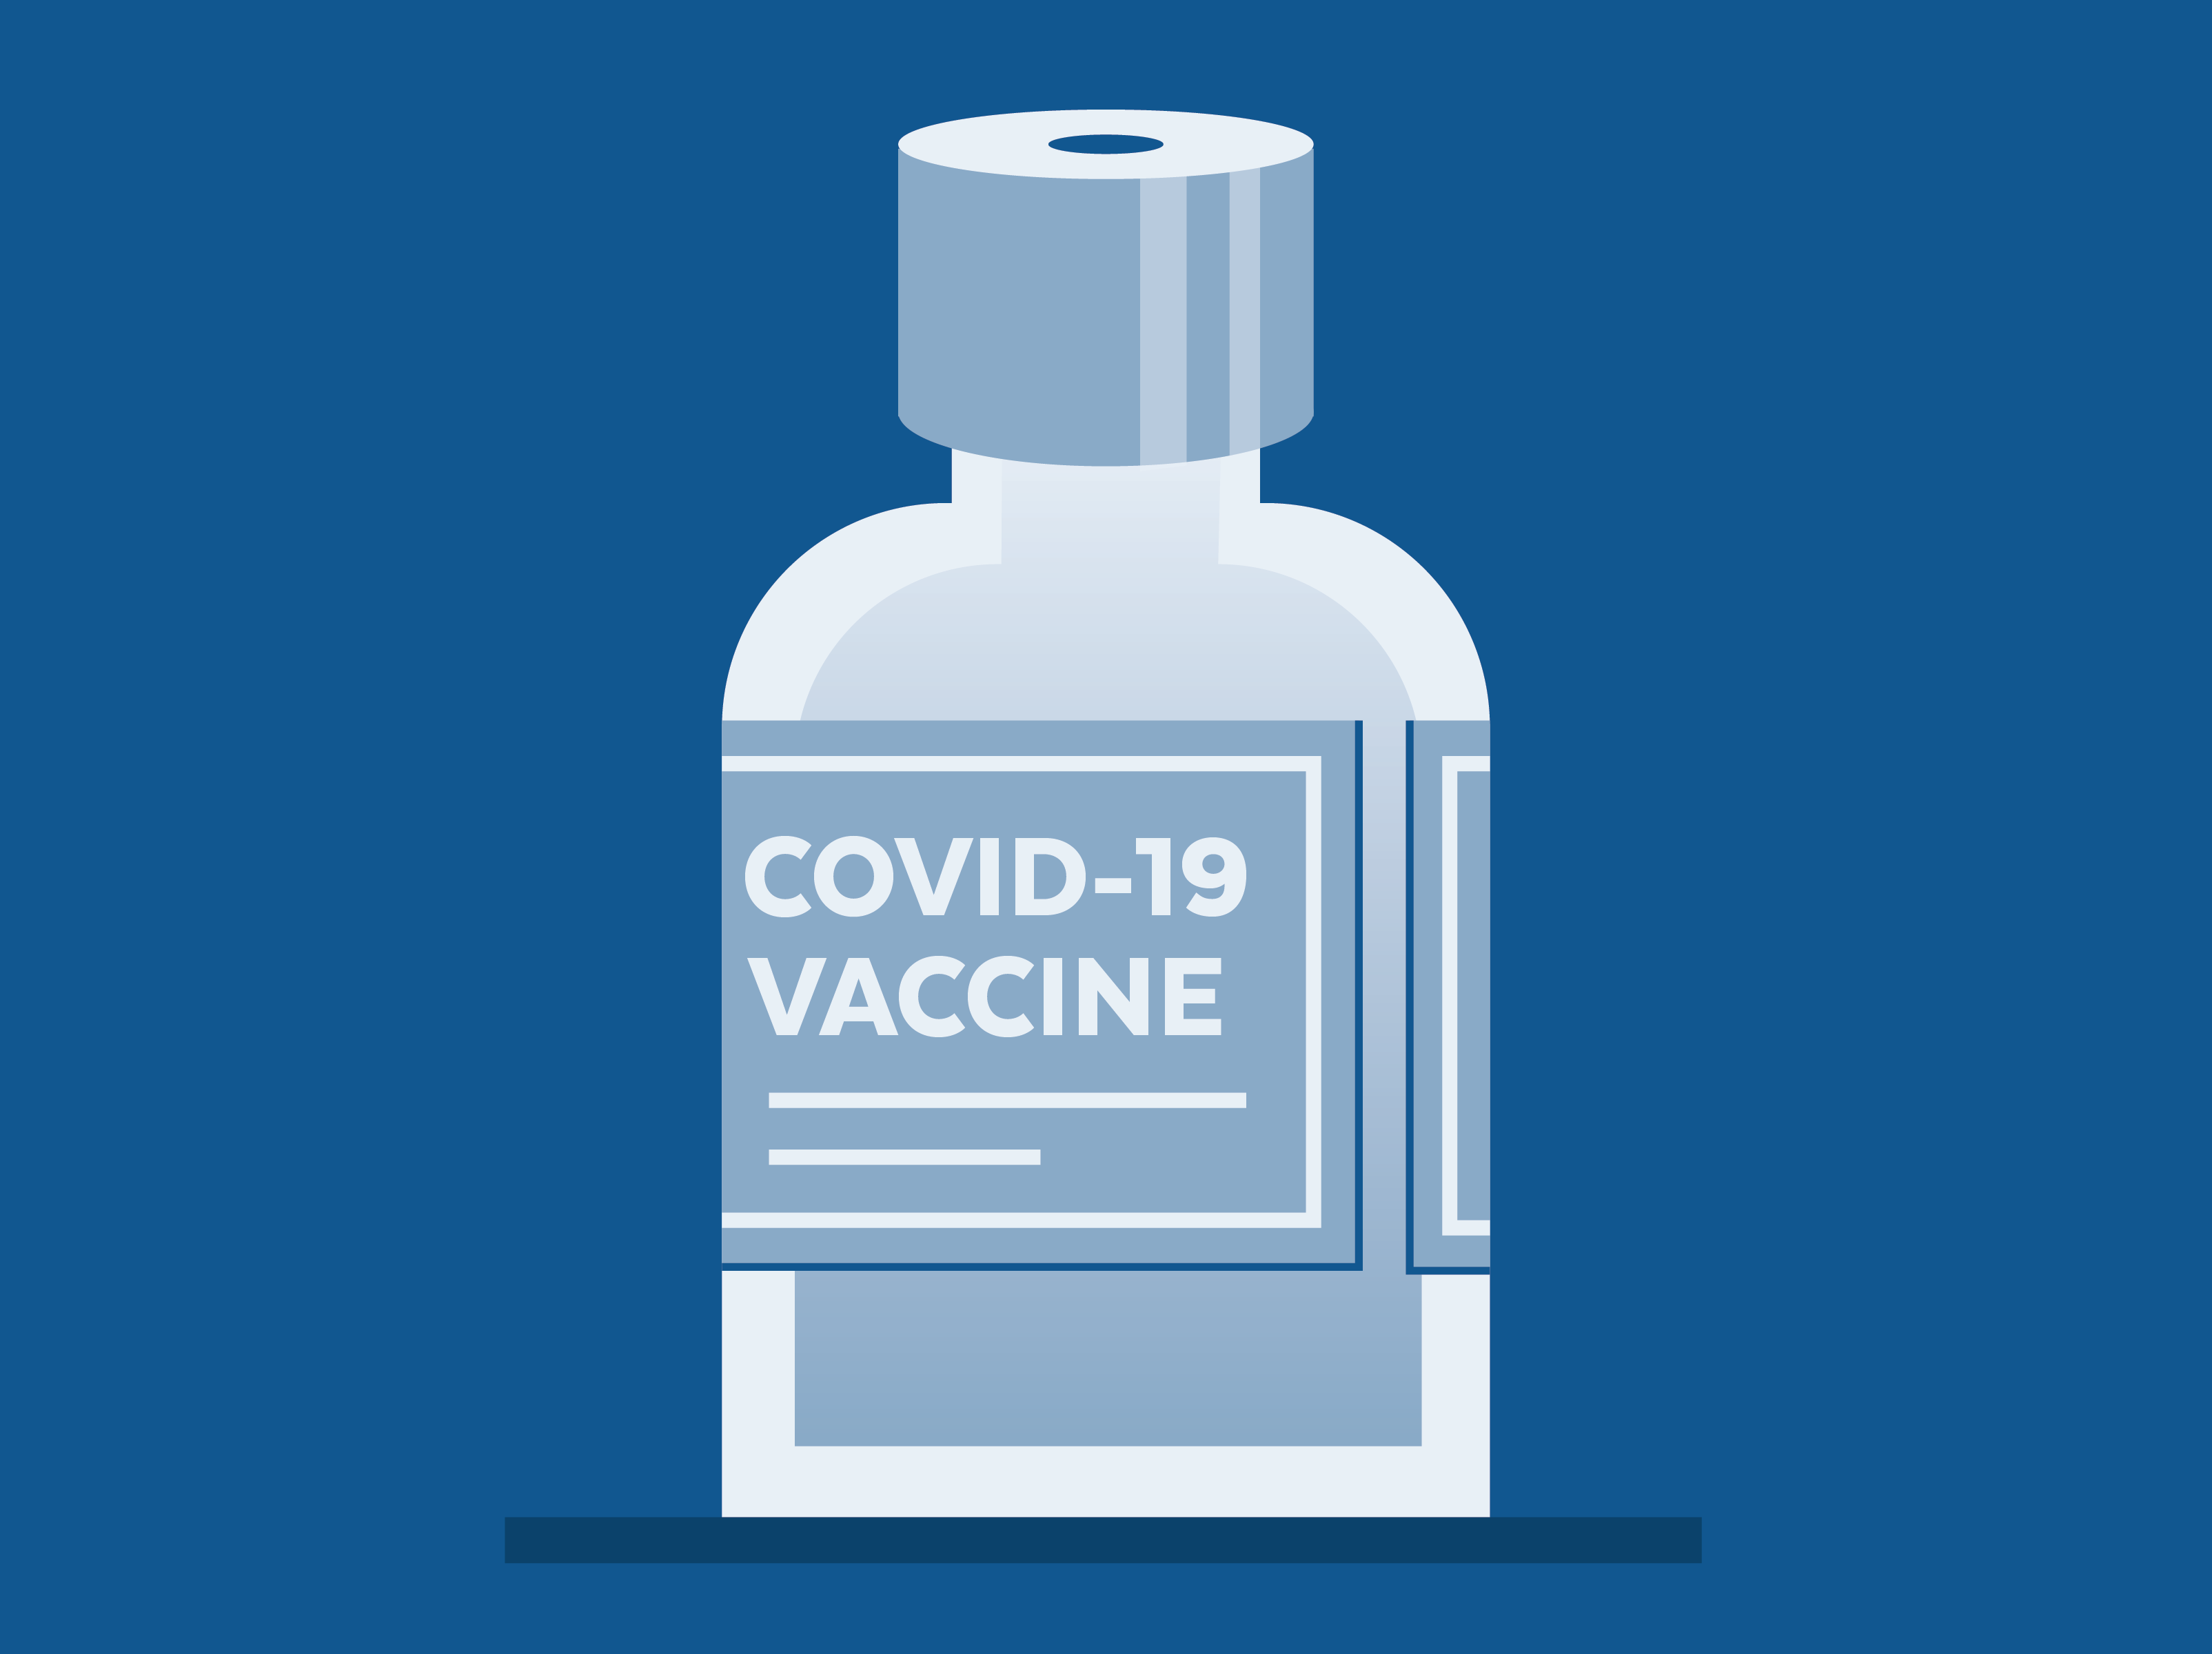 Where To Take Covid-19 Vaccine In Kien Giang? Address For Coronavirus Vaccinations In Vietnam